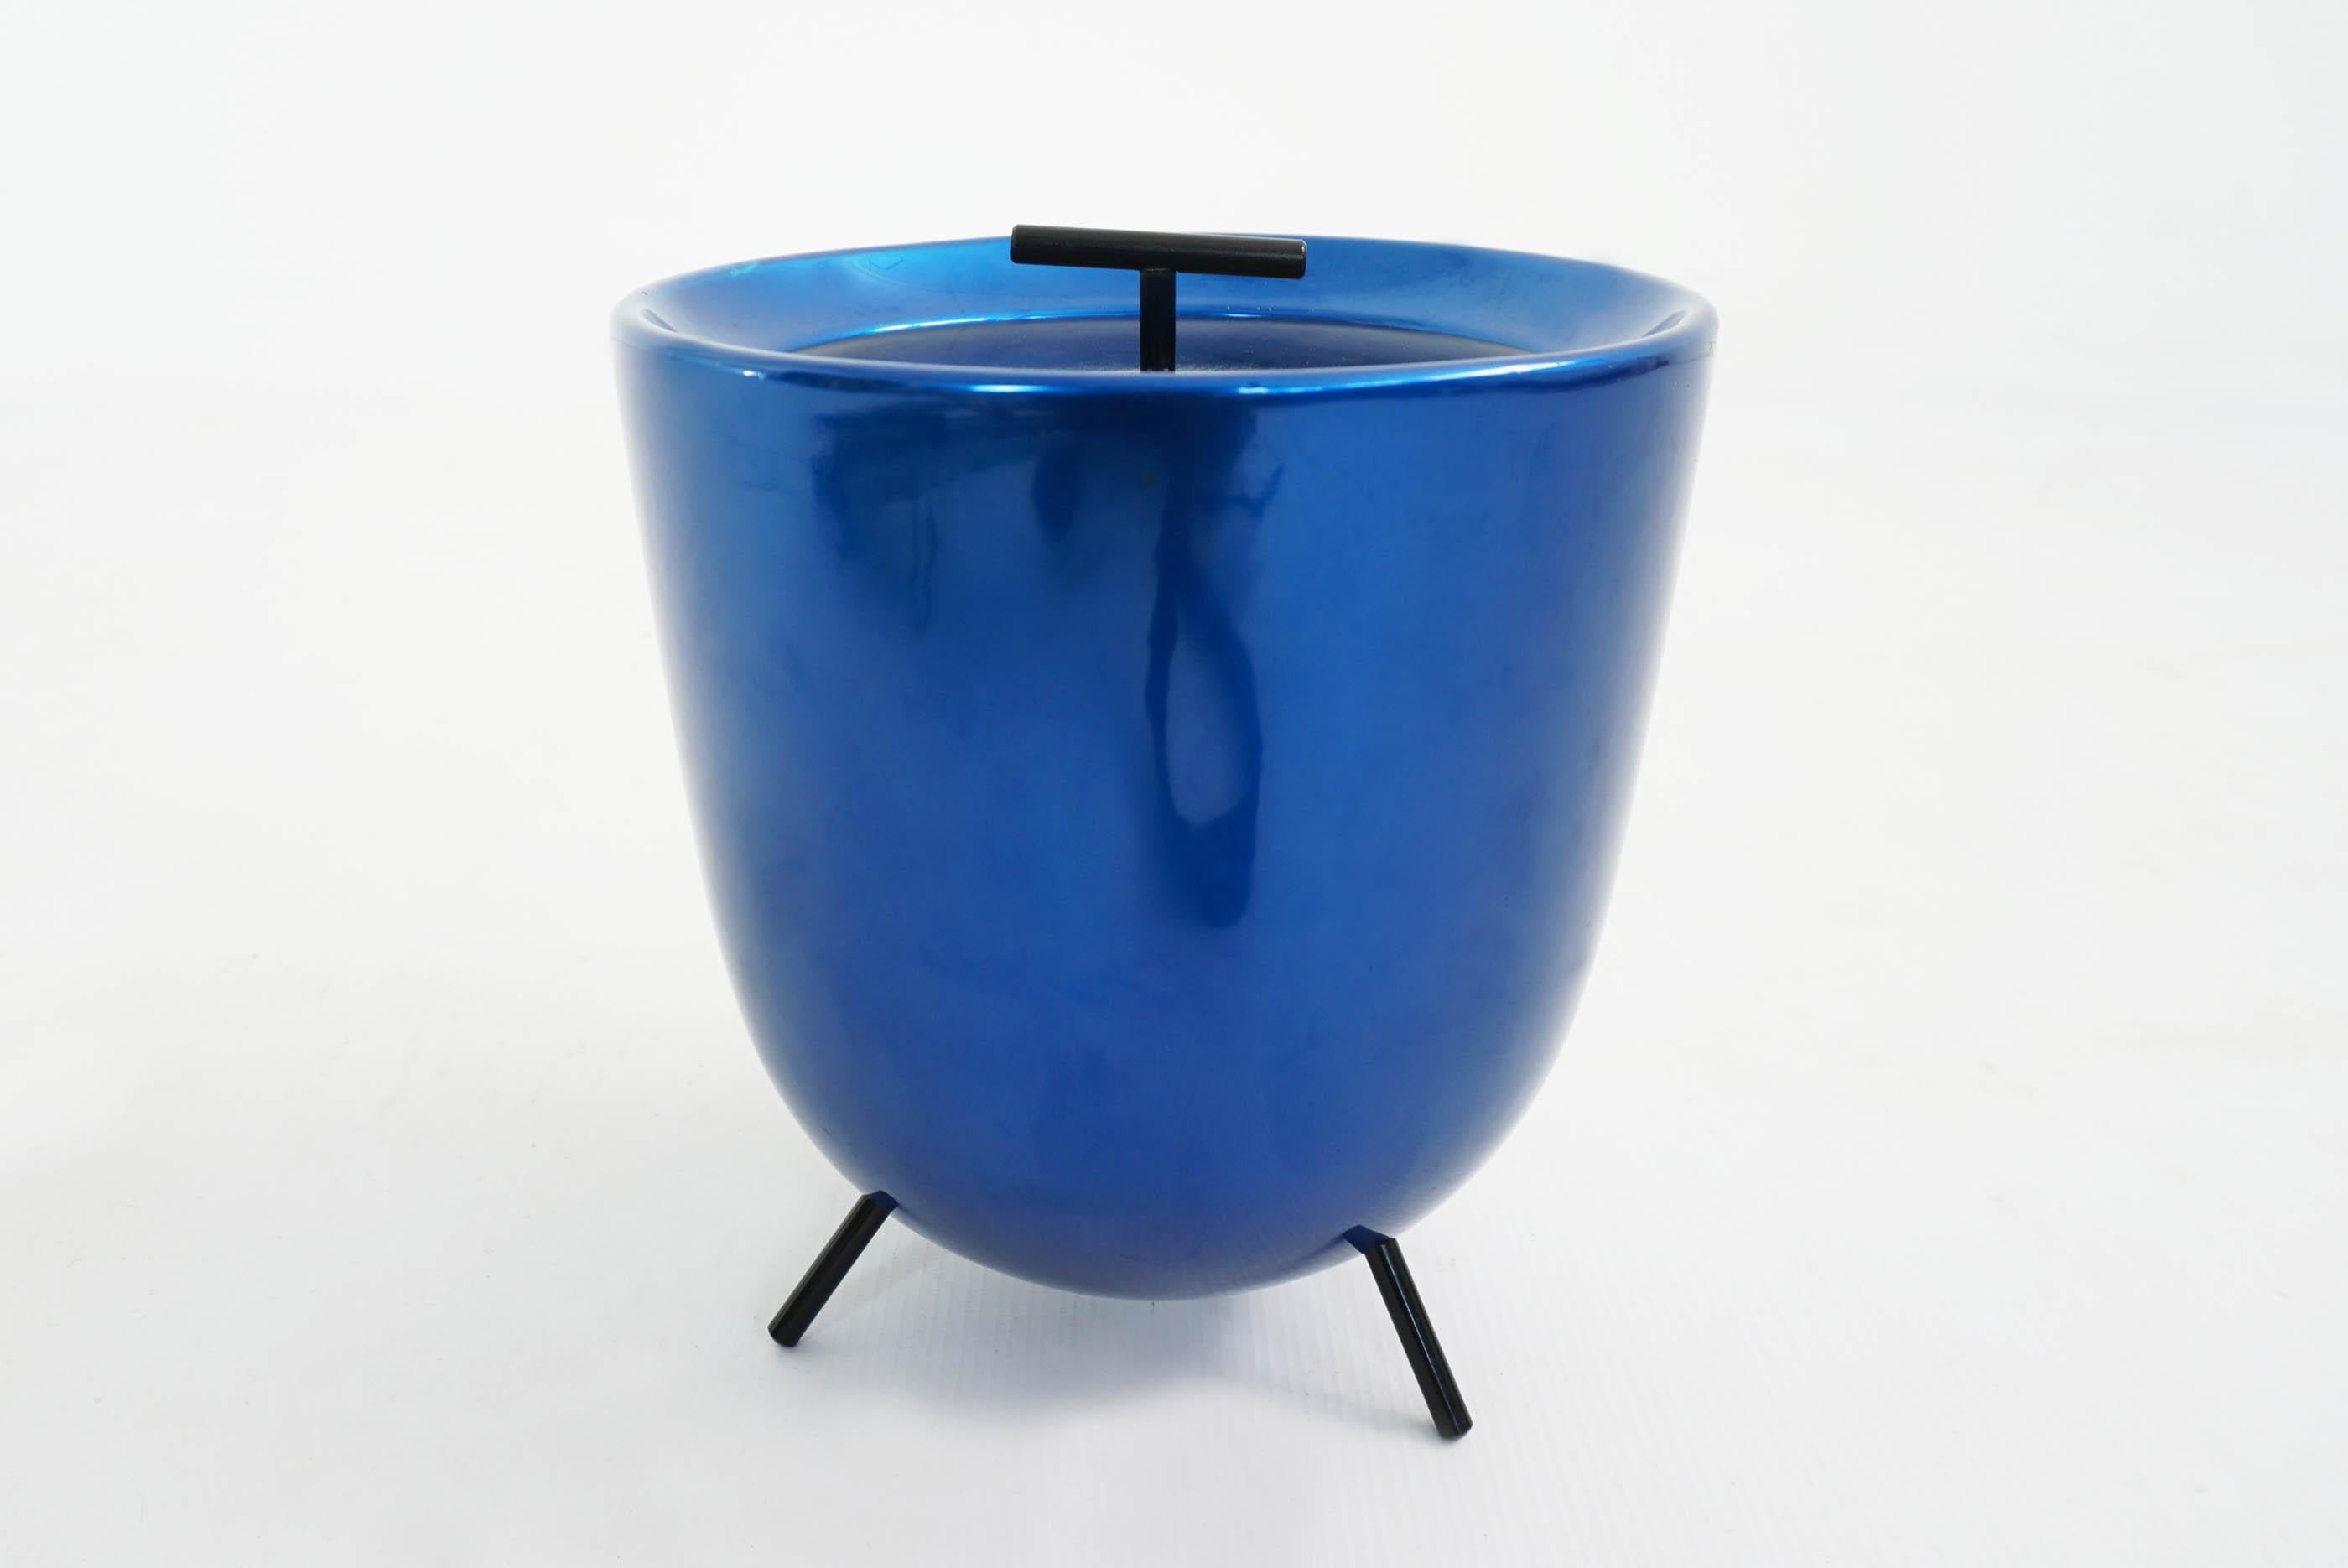 Ice bucket mod. 501 designed by Bruno Munari, Made by Zani & Zani 
Prize 1955 Compasso D'Oro, Italy

Engraved logo under the lid.

Literature:
Compasso d’Oro 1954-1984, 1984.